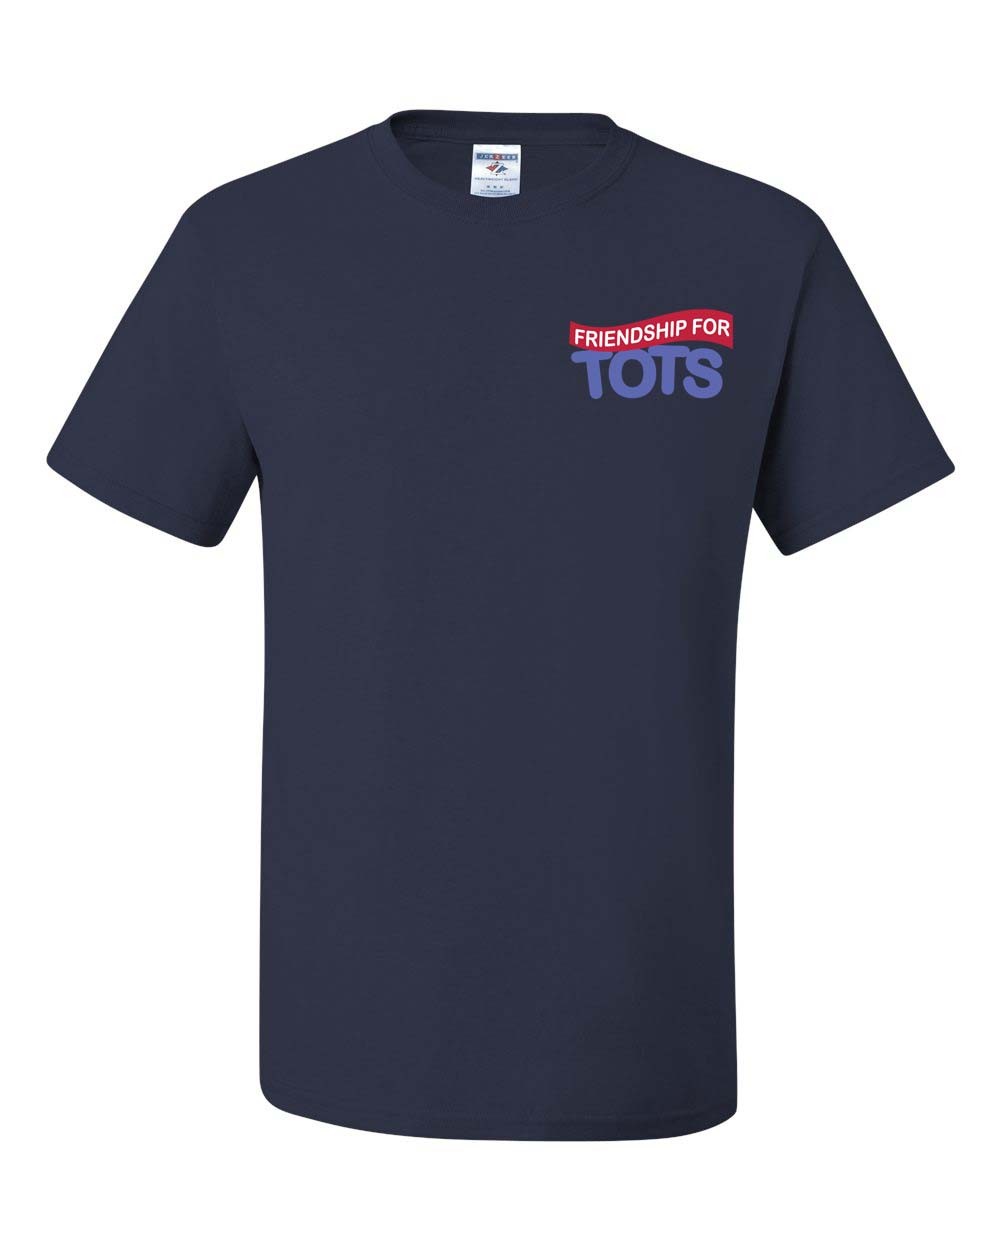 FTOTS Navy S/S Gym T-Shirt w/ School Logo